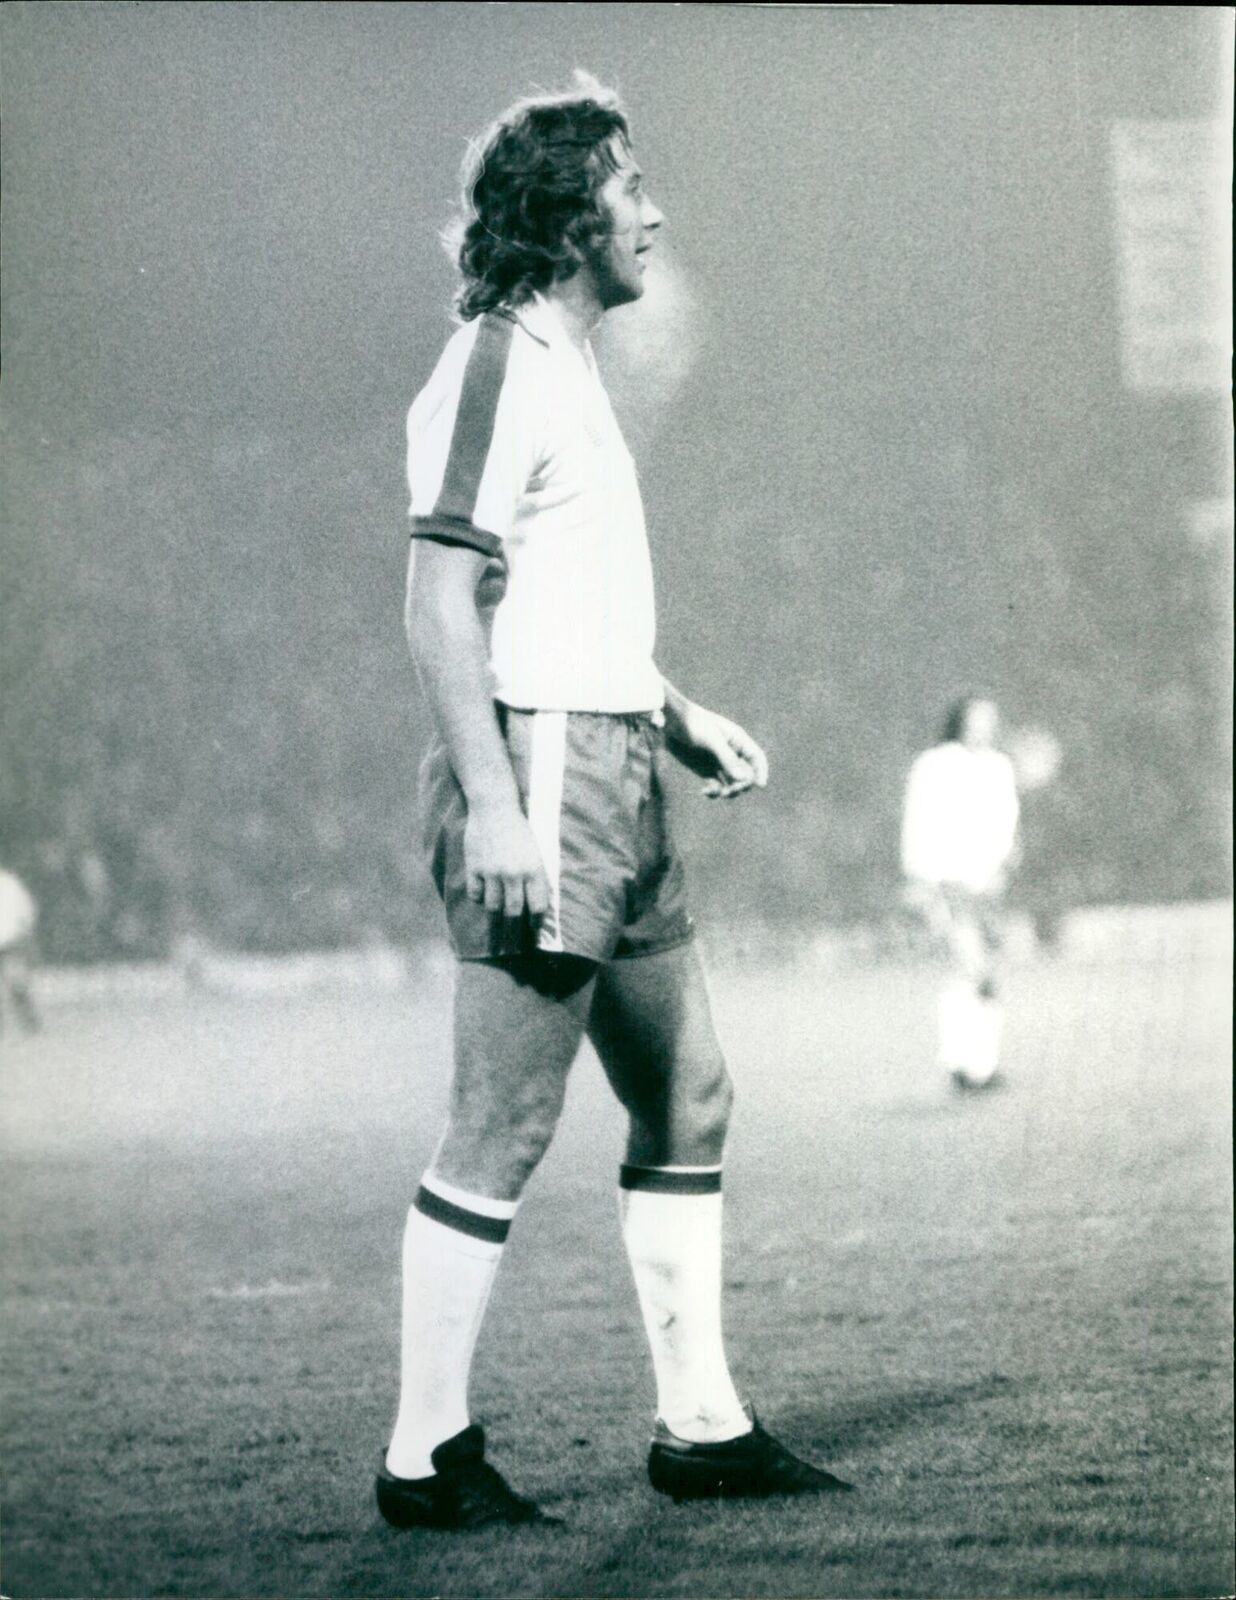 1975 - TAYLOR TOMMY FOOTBALL CHARLTON WEST HAM F C - Vintage Photograph 3851558